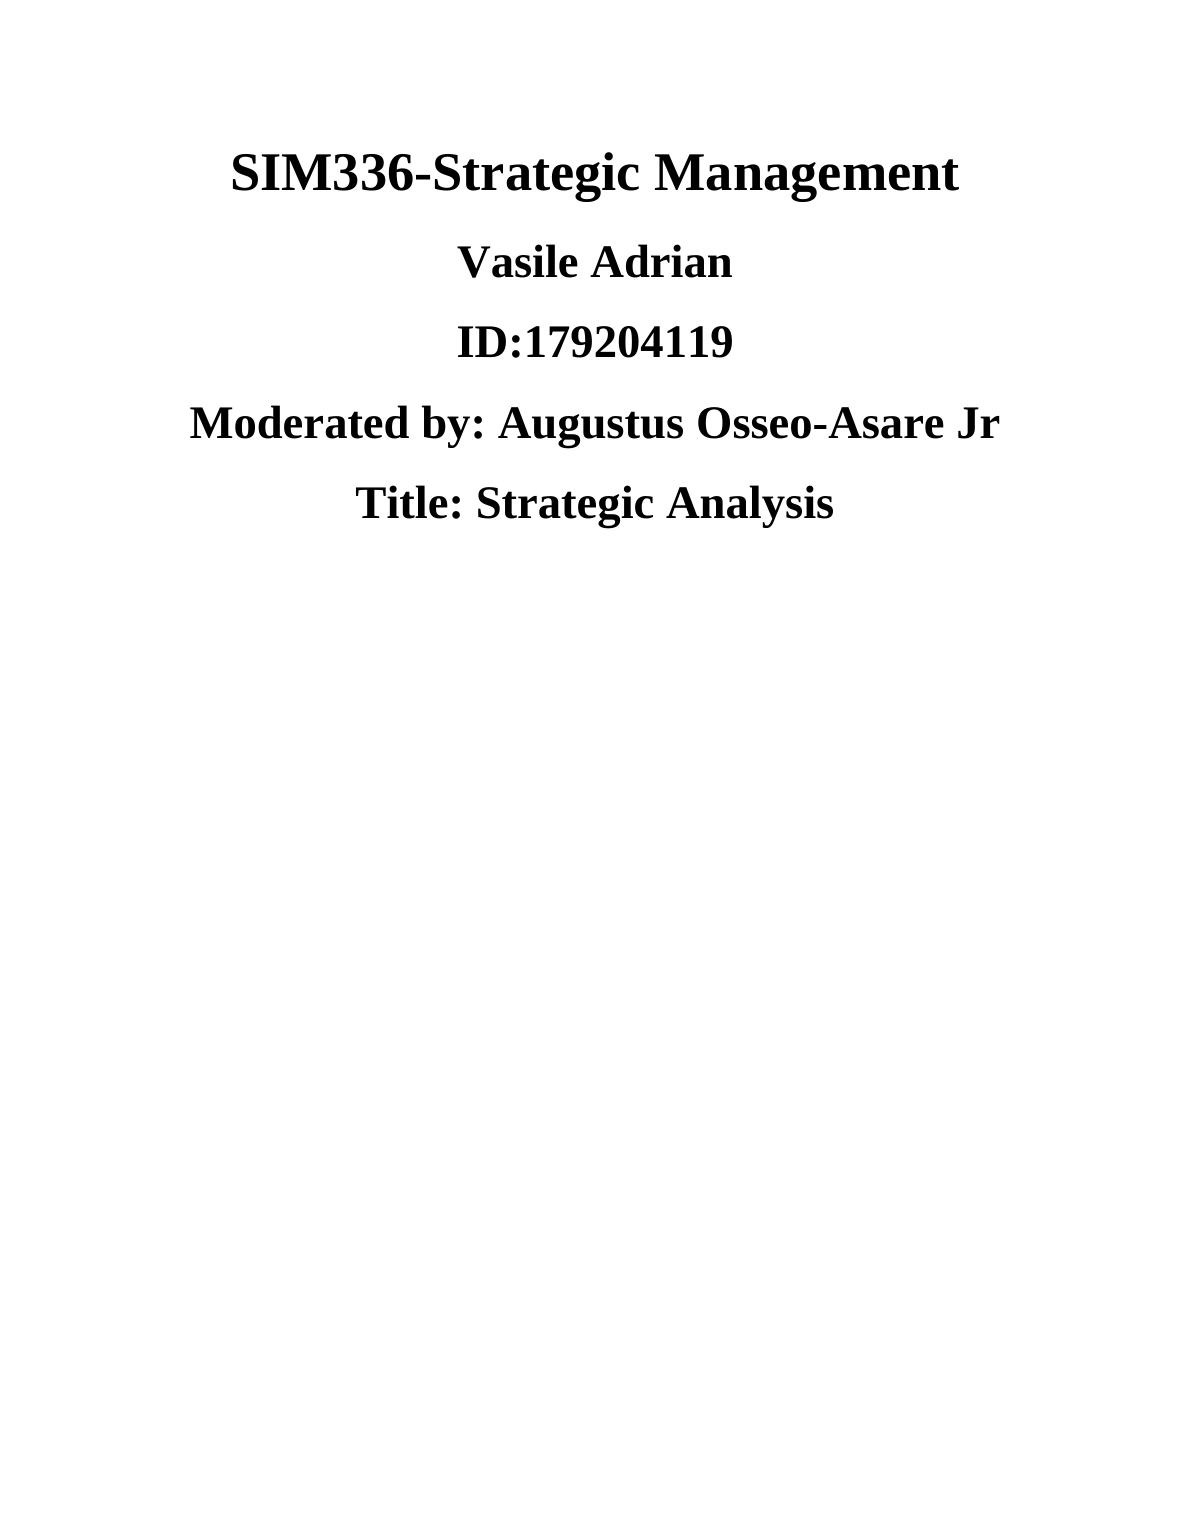 SIM336 Strategic Management_1